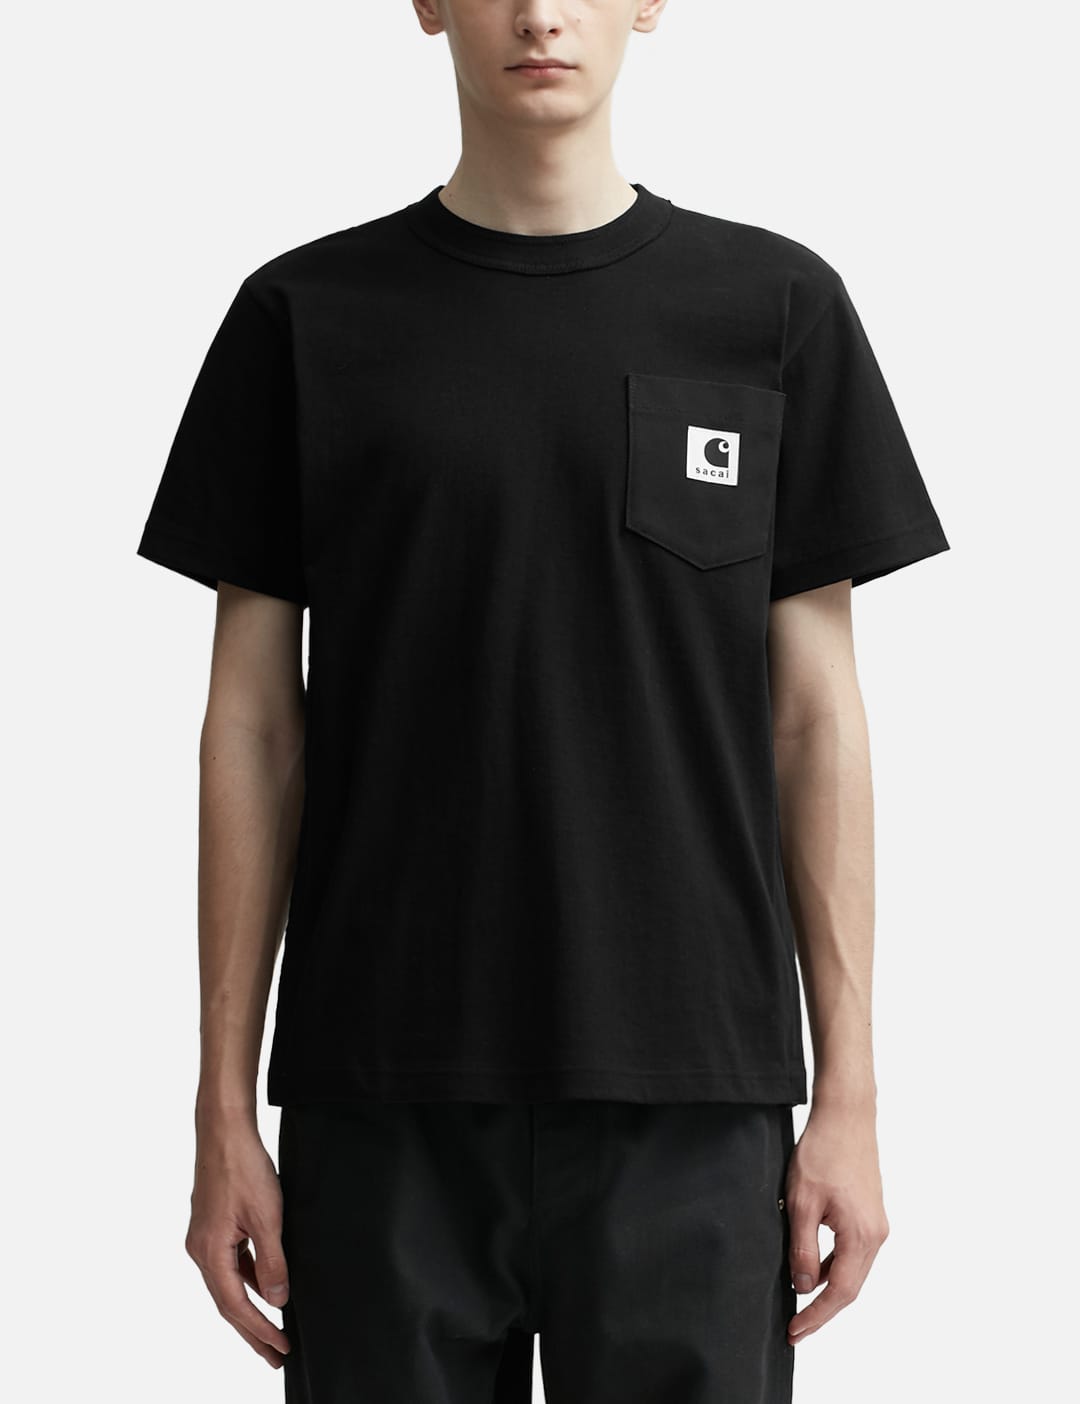 Sacai x Carhartt WIP T-shirt black